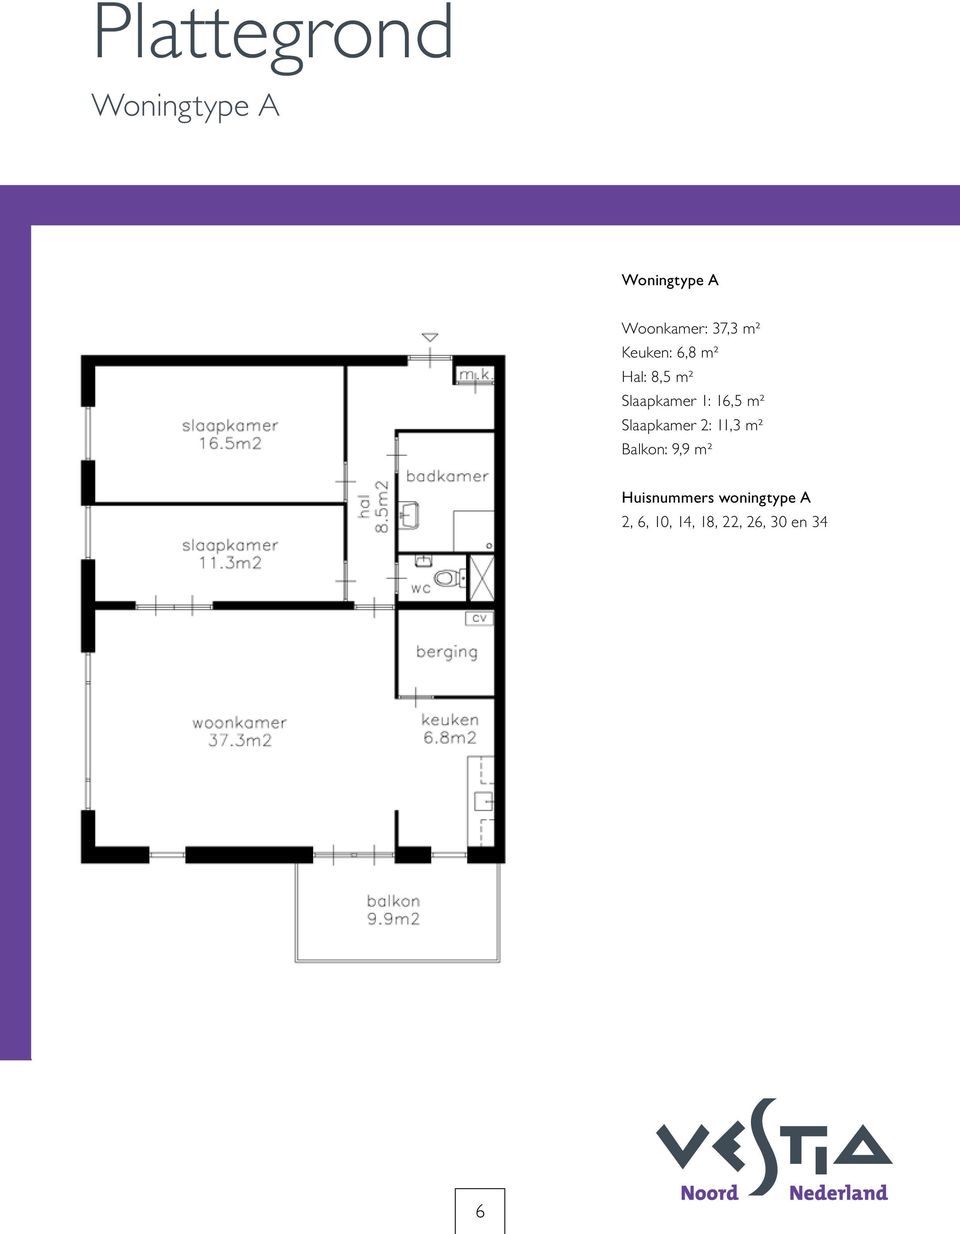 16,5 m² Slaapkamer 2: 11,3 m² Balkon: 9,9 m²